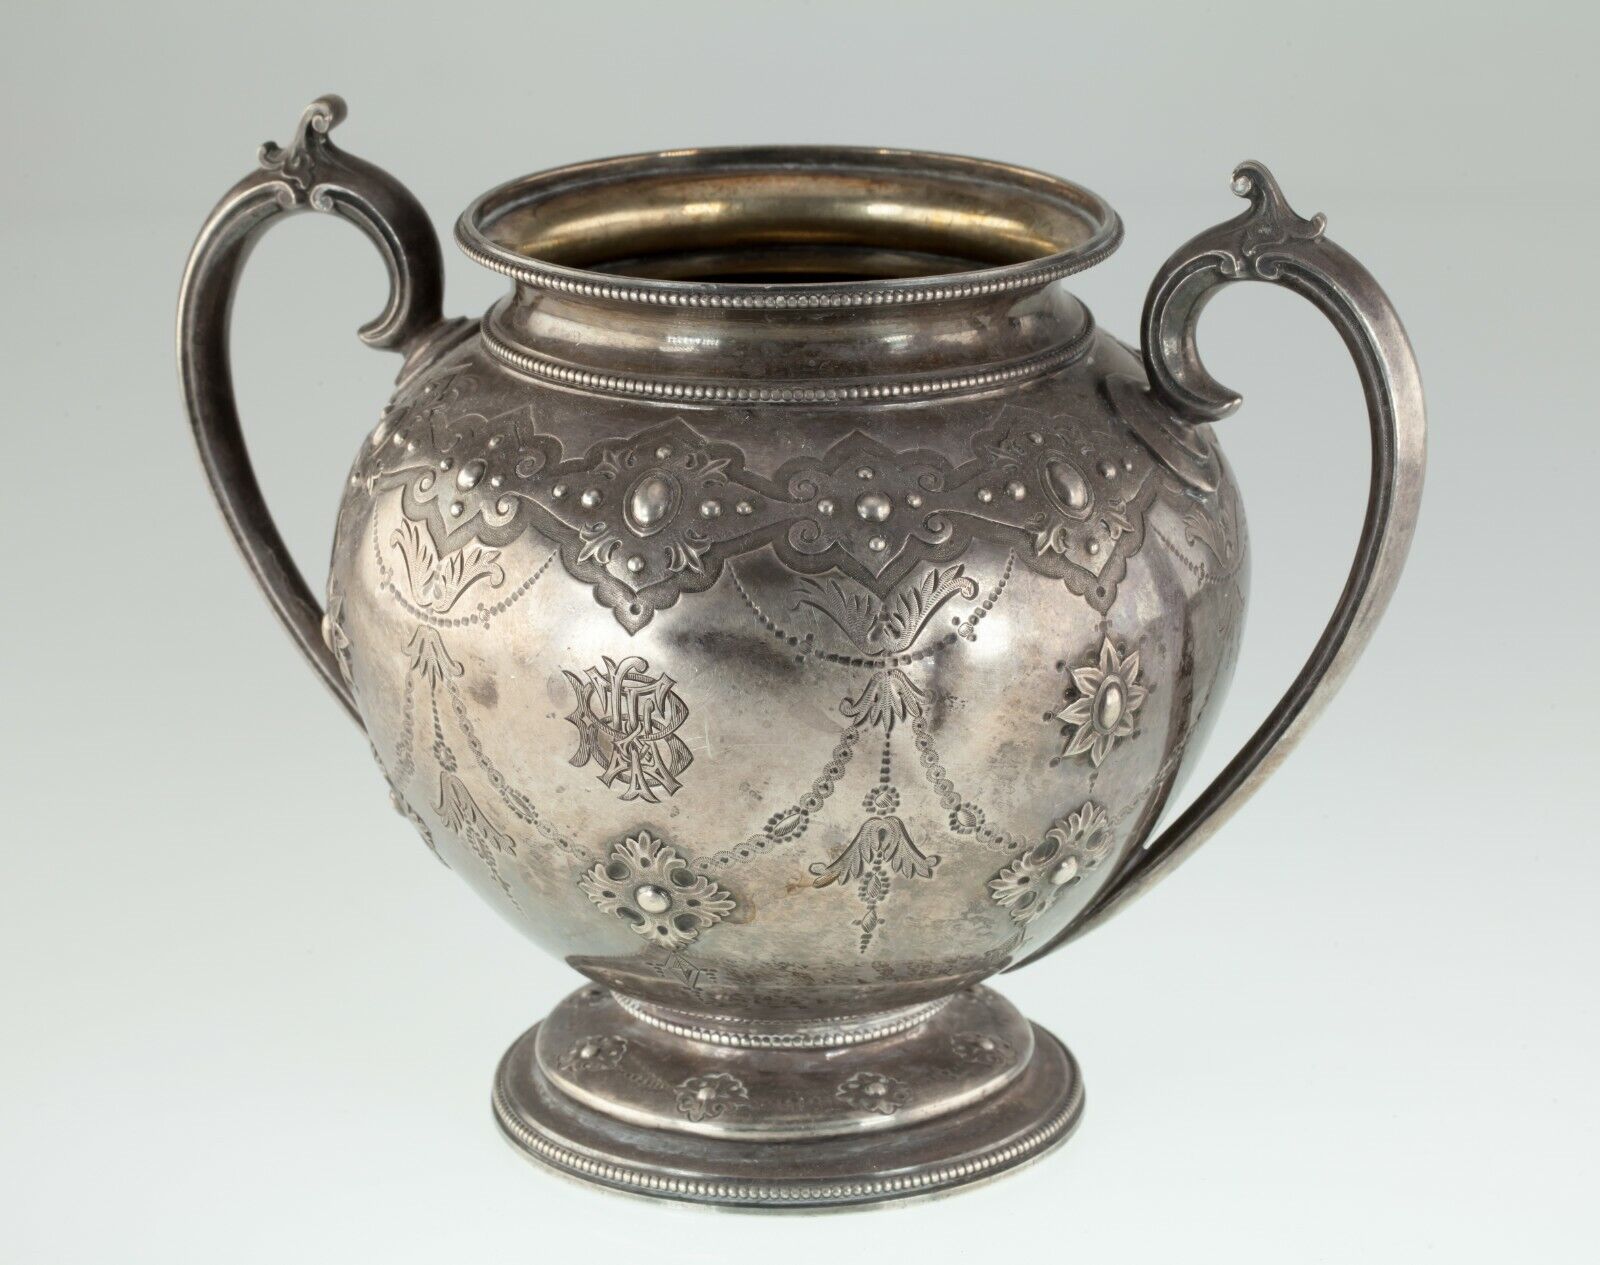 Ornate Sterling Silver Urn by Edward Barnard & Sons London 1875